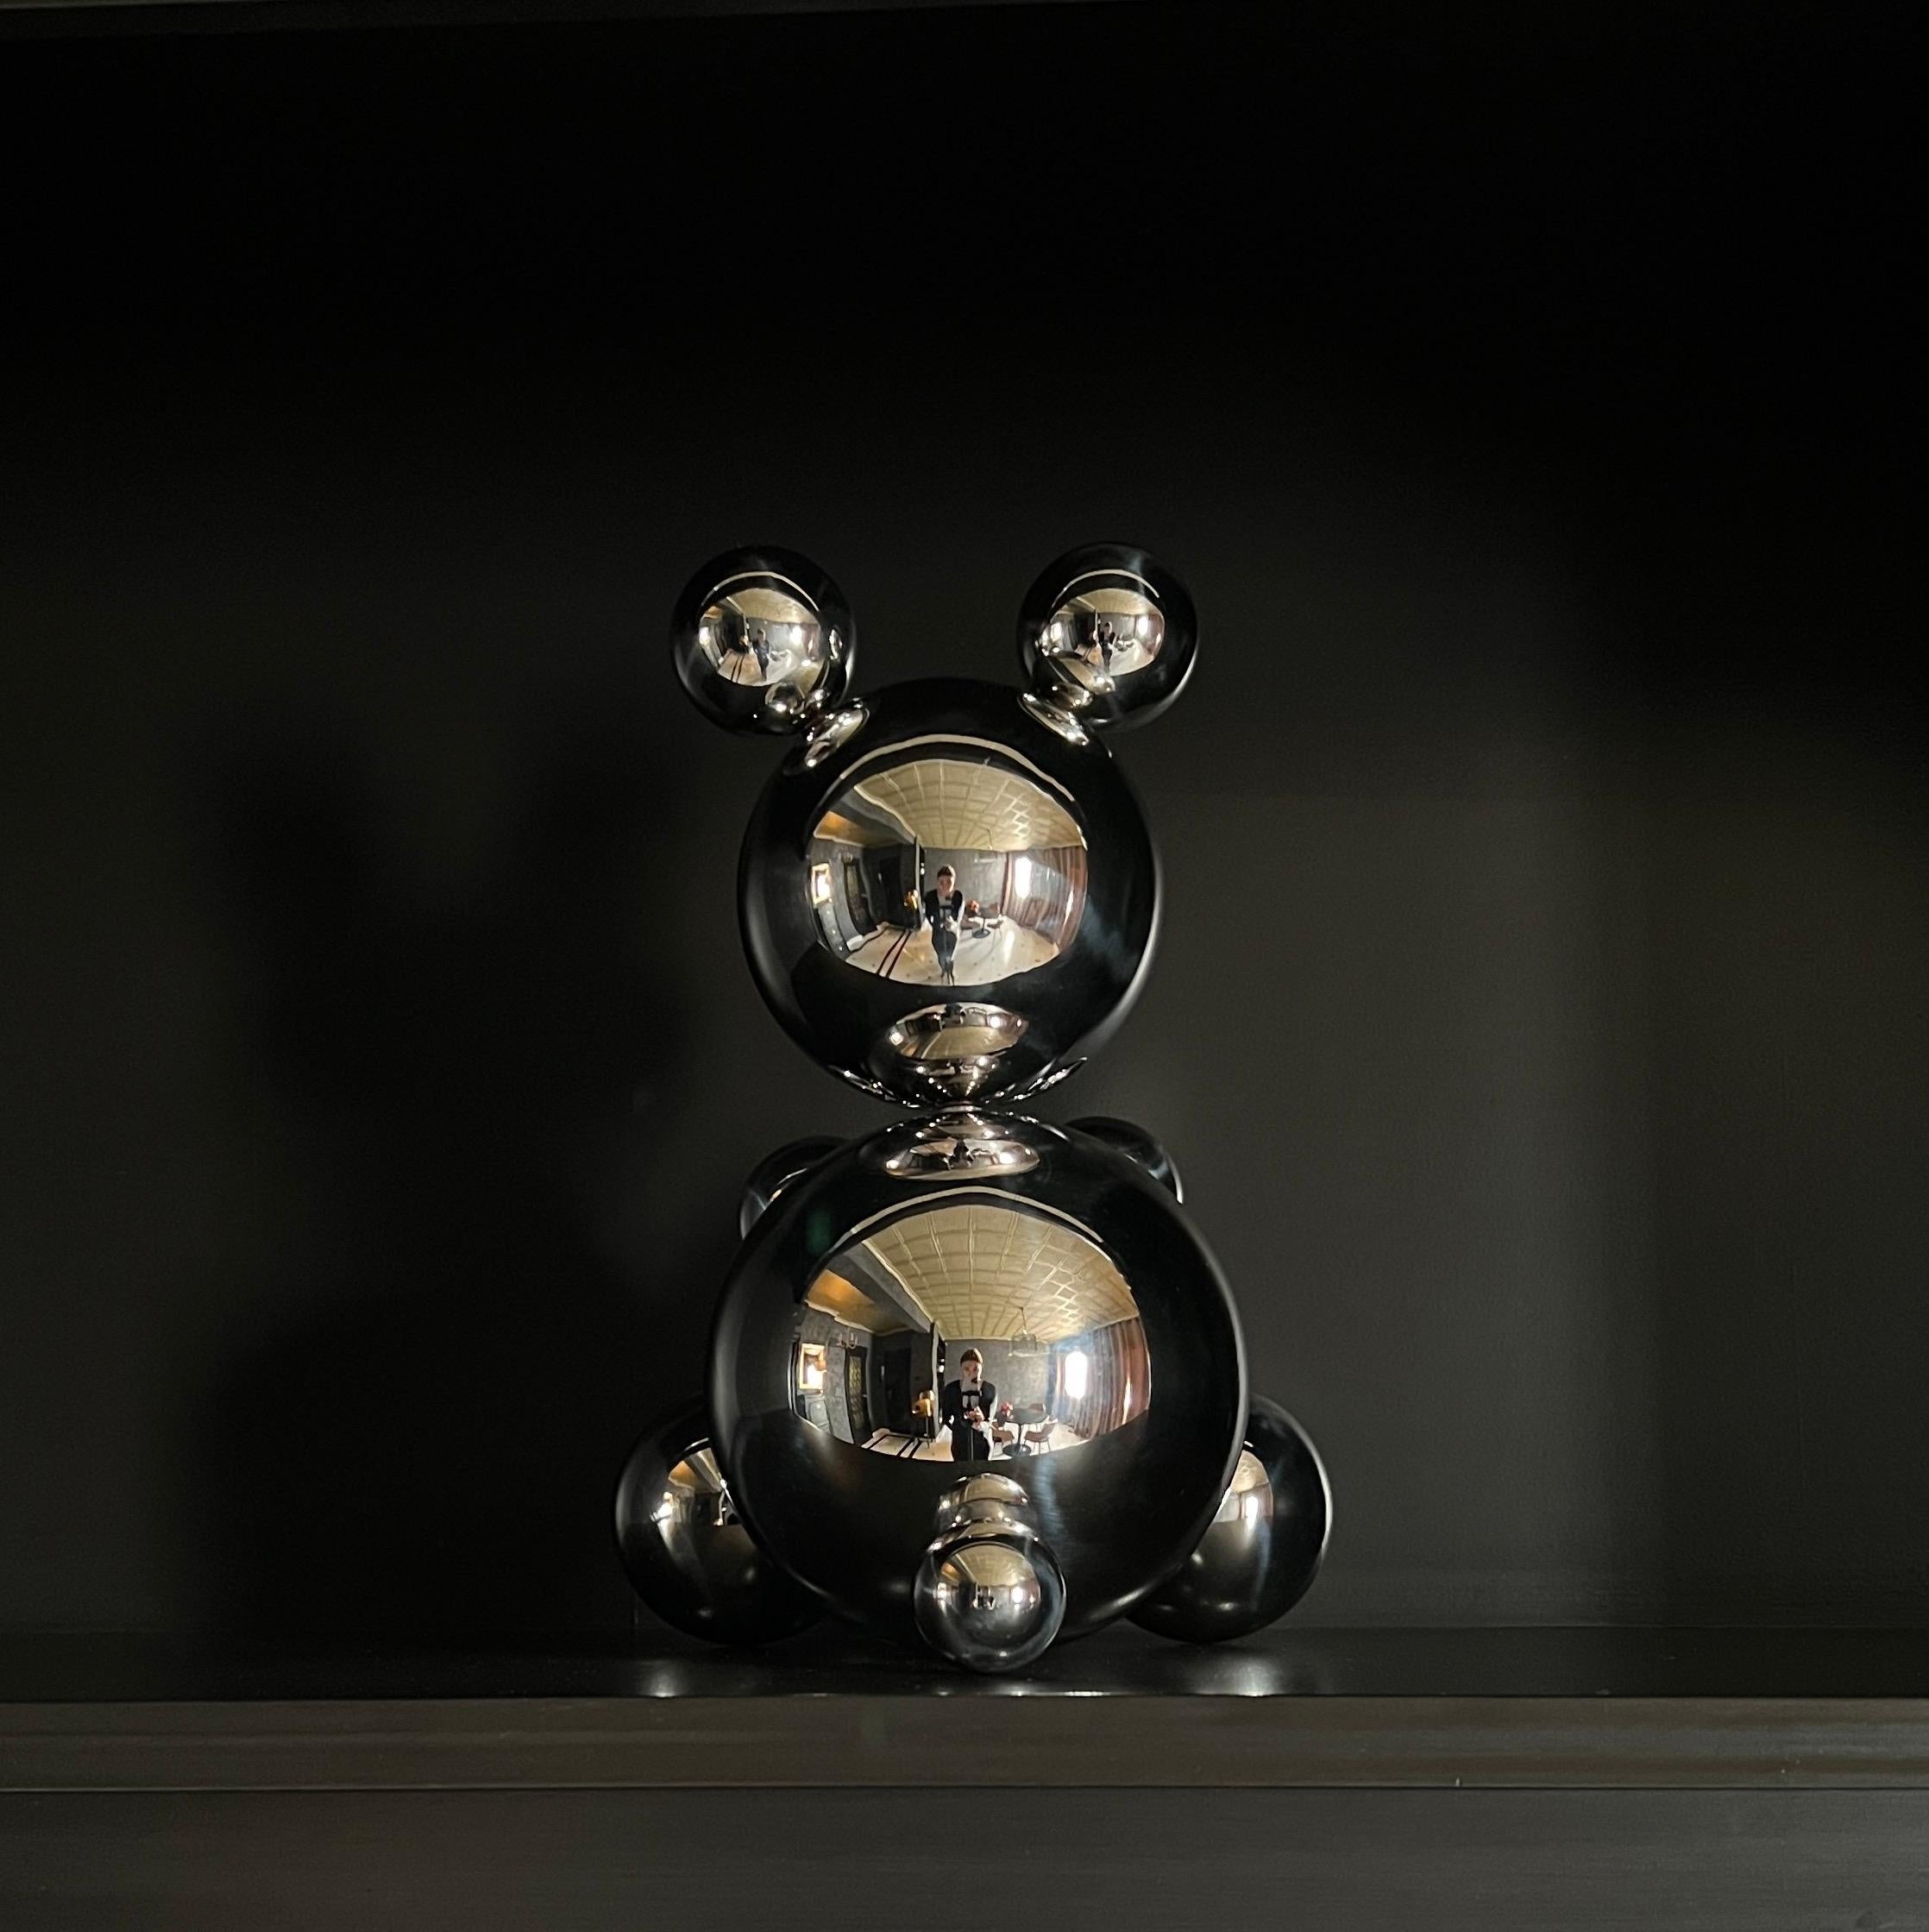 Middle Stainless Steel Bear 'Oscar' Sculpture Minimalistic Animal 2